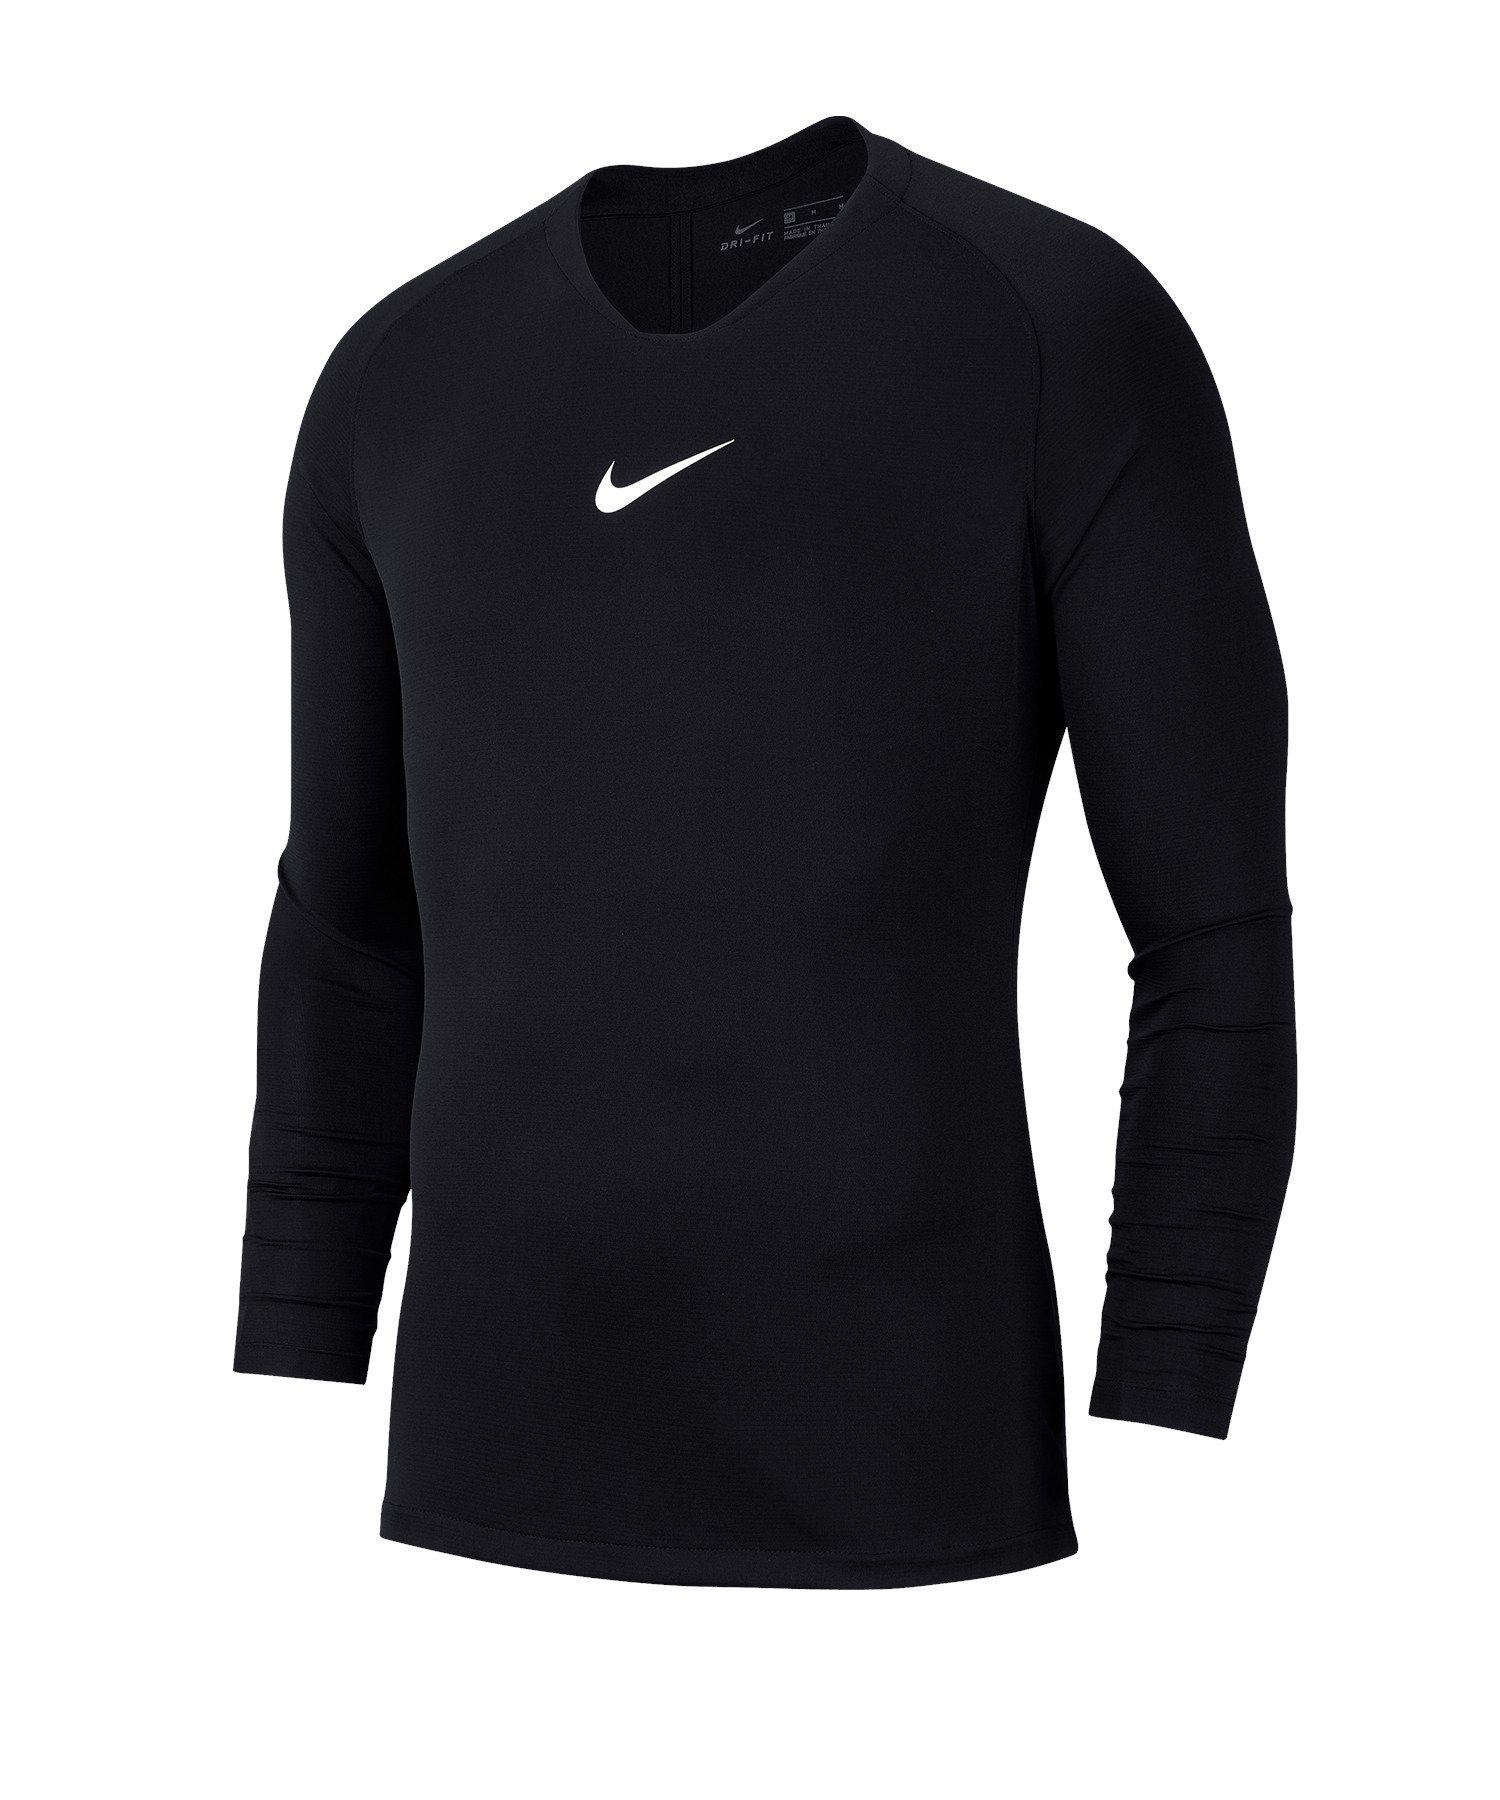 Nike First Park Kids Funktionsshirt schwarzweiss Daumenöffnung Layer Top